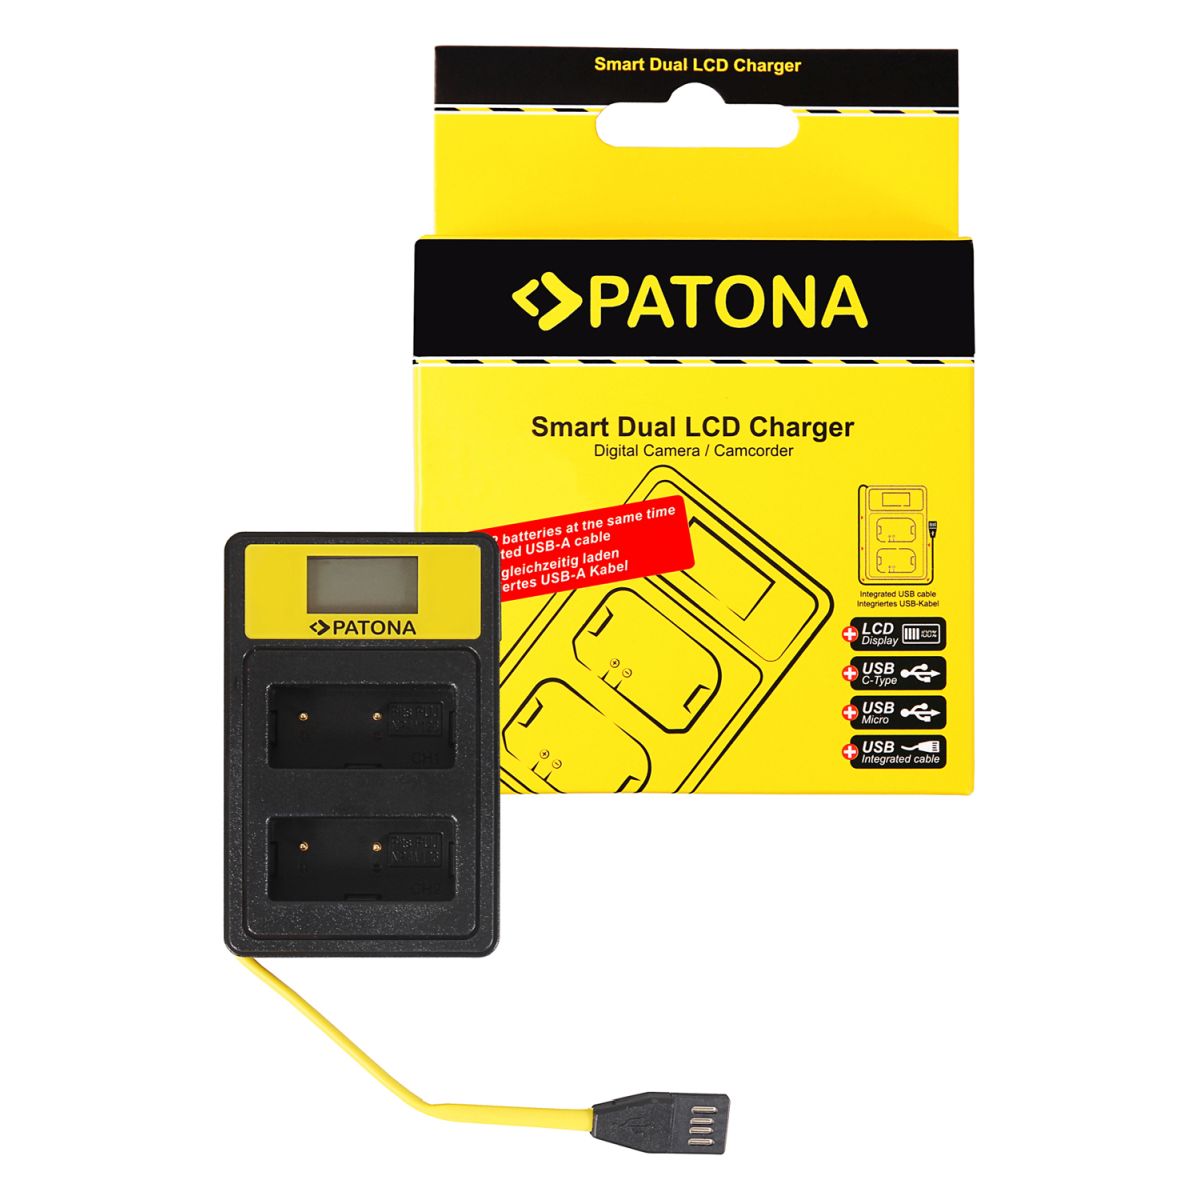 Patona Dual LCD USB Ladegerät Fujifilm NP-W 126